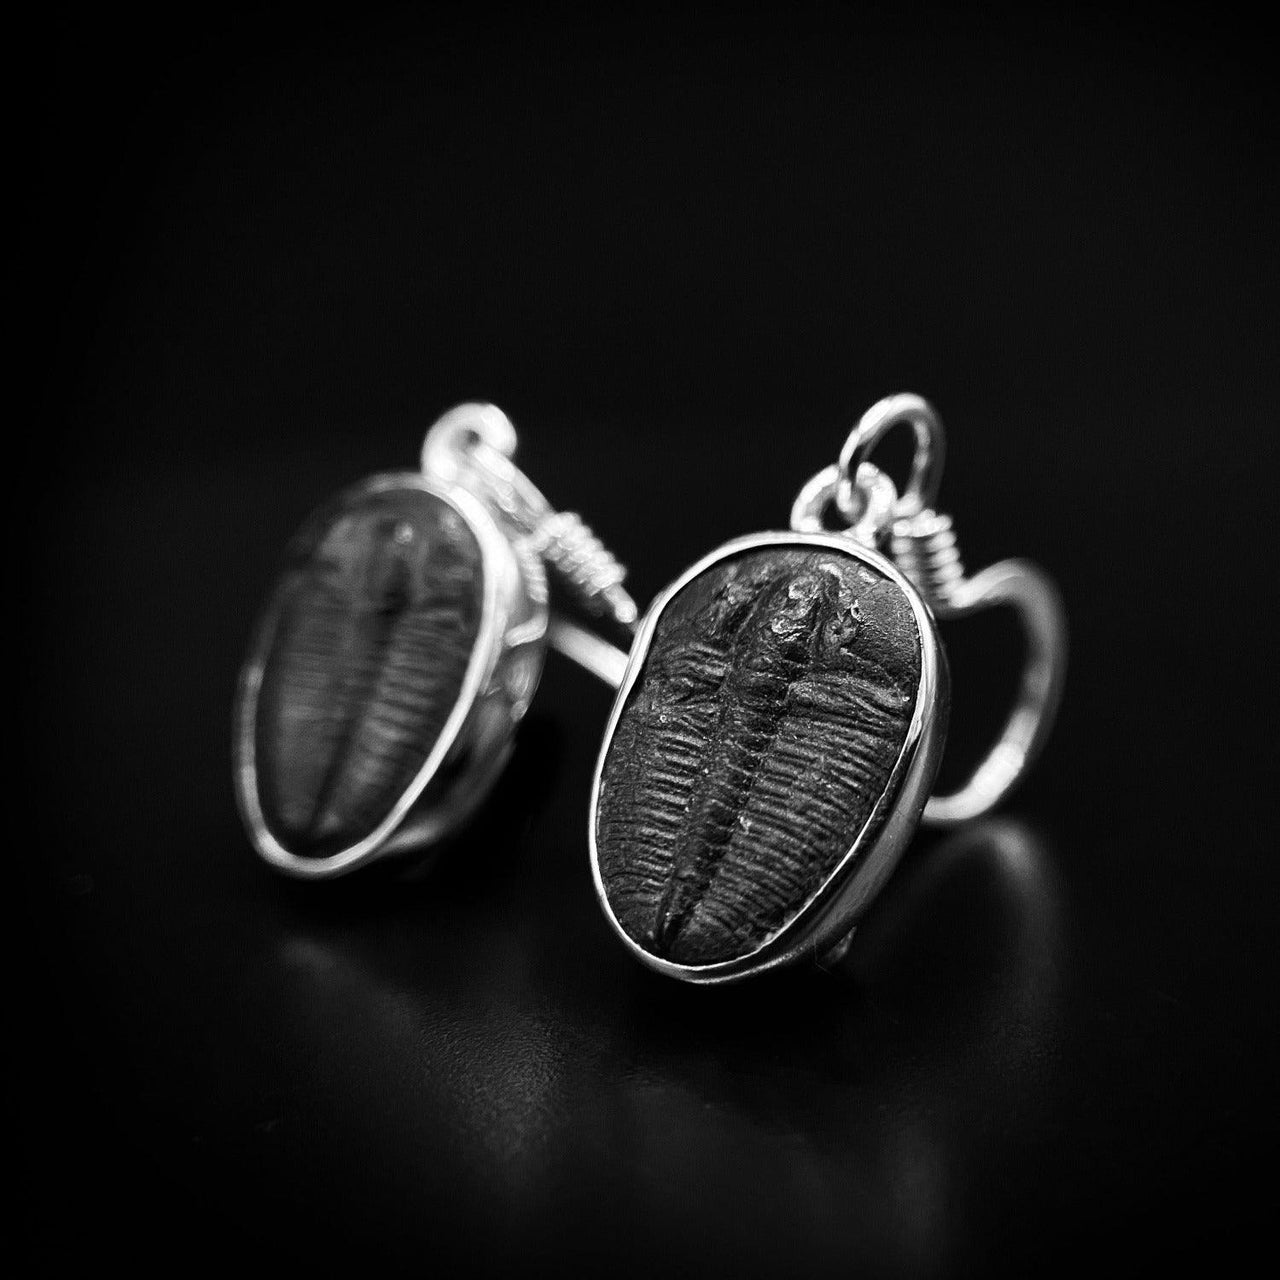 Trilobite Drop Earrings encased in 925 Sterling Silver - Black Feather Design